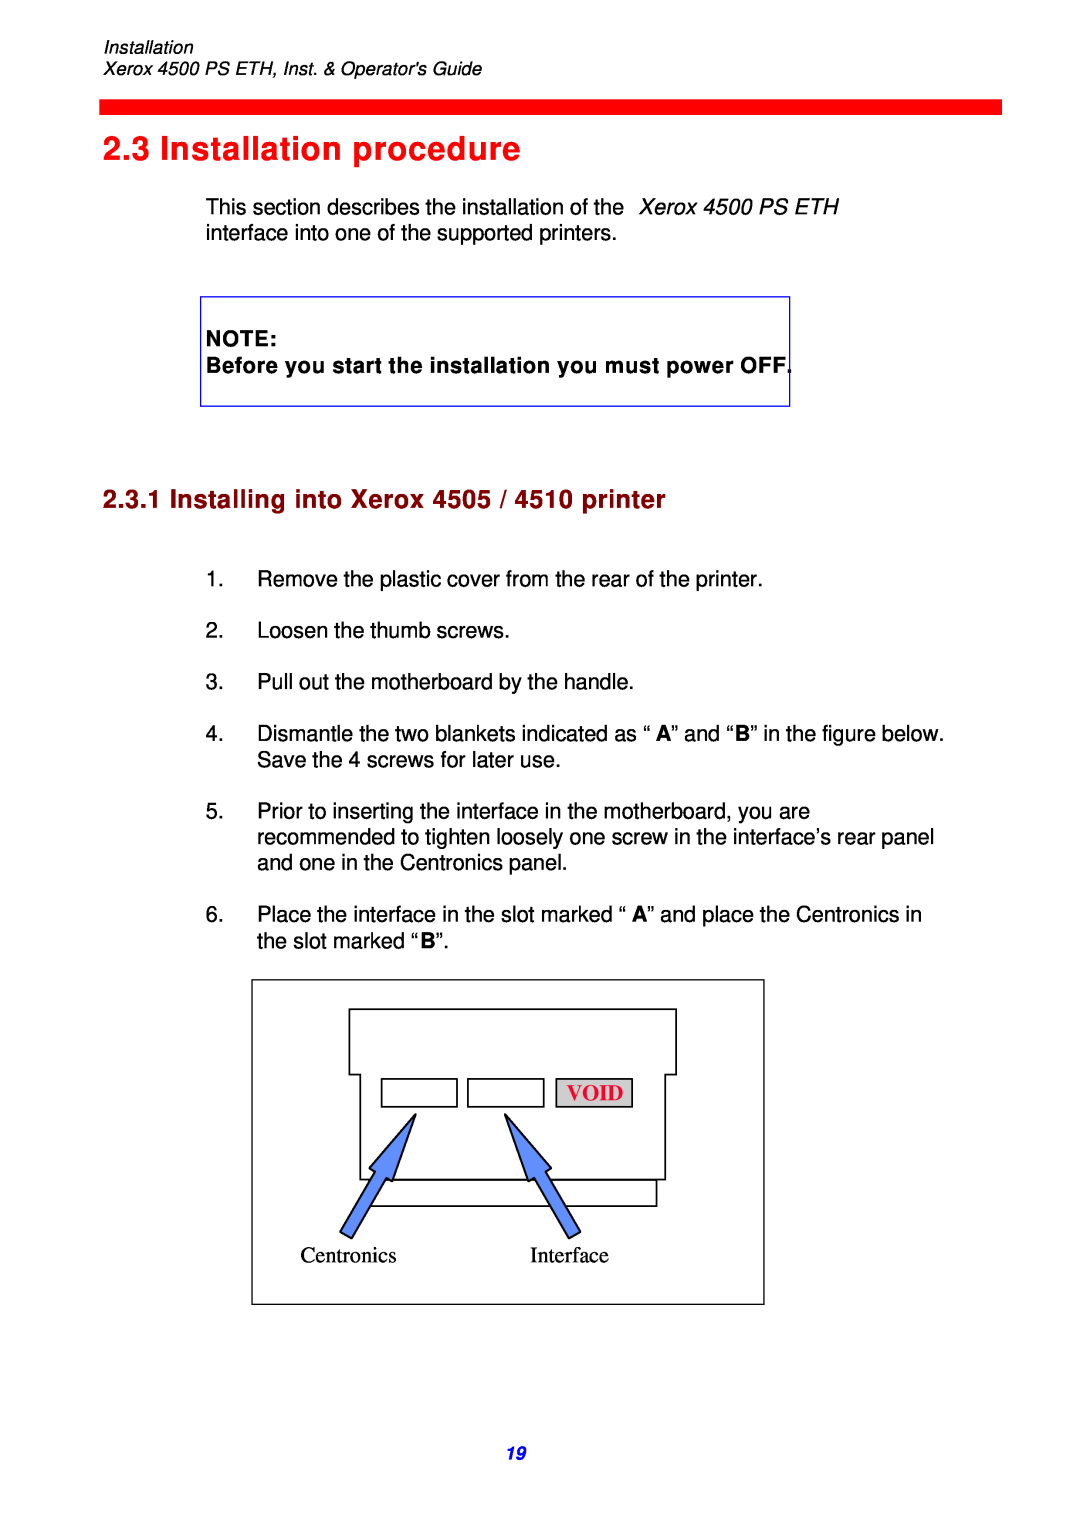 Xerox 4500 ps eth instruction manual Installation procedure, Installing into Xerox 4505 / 4510 printer, Void 